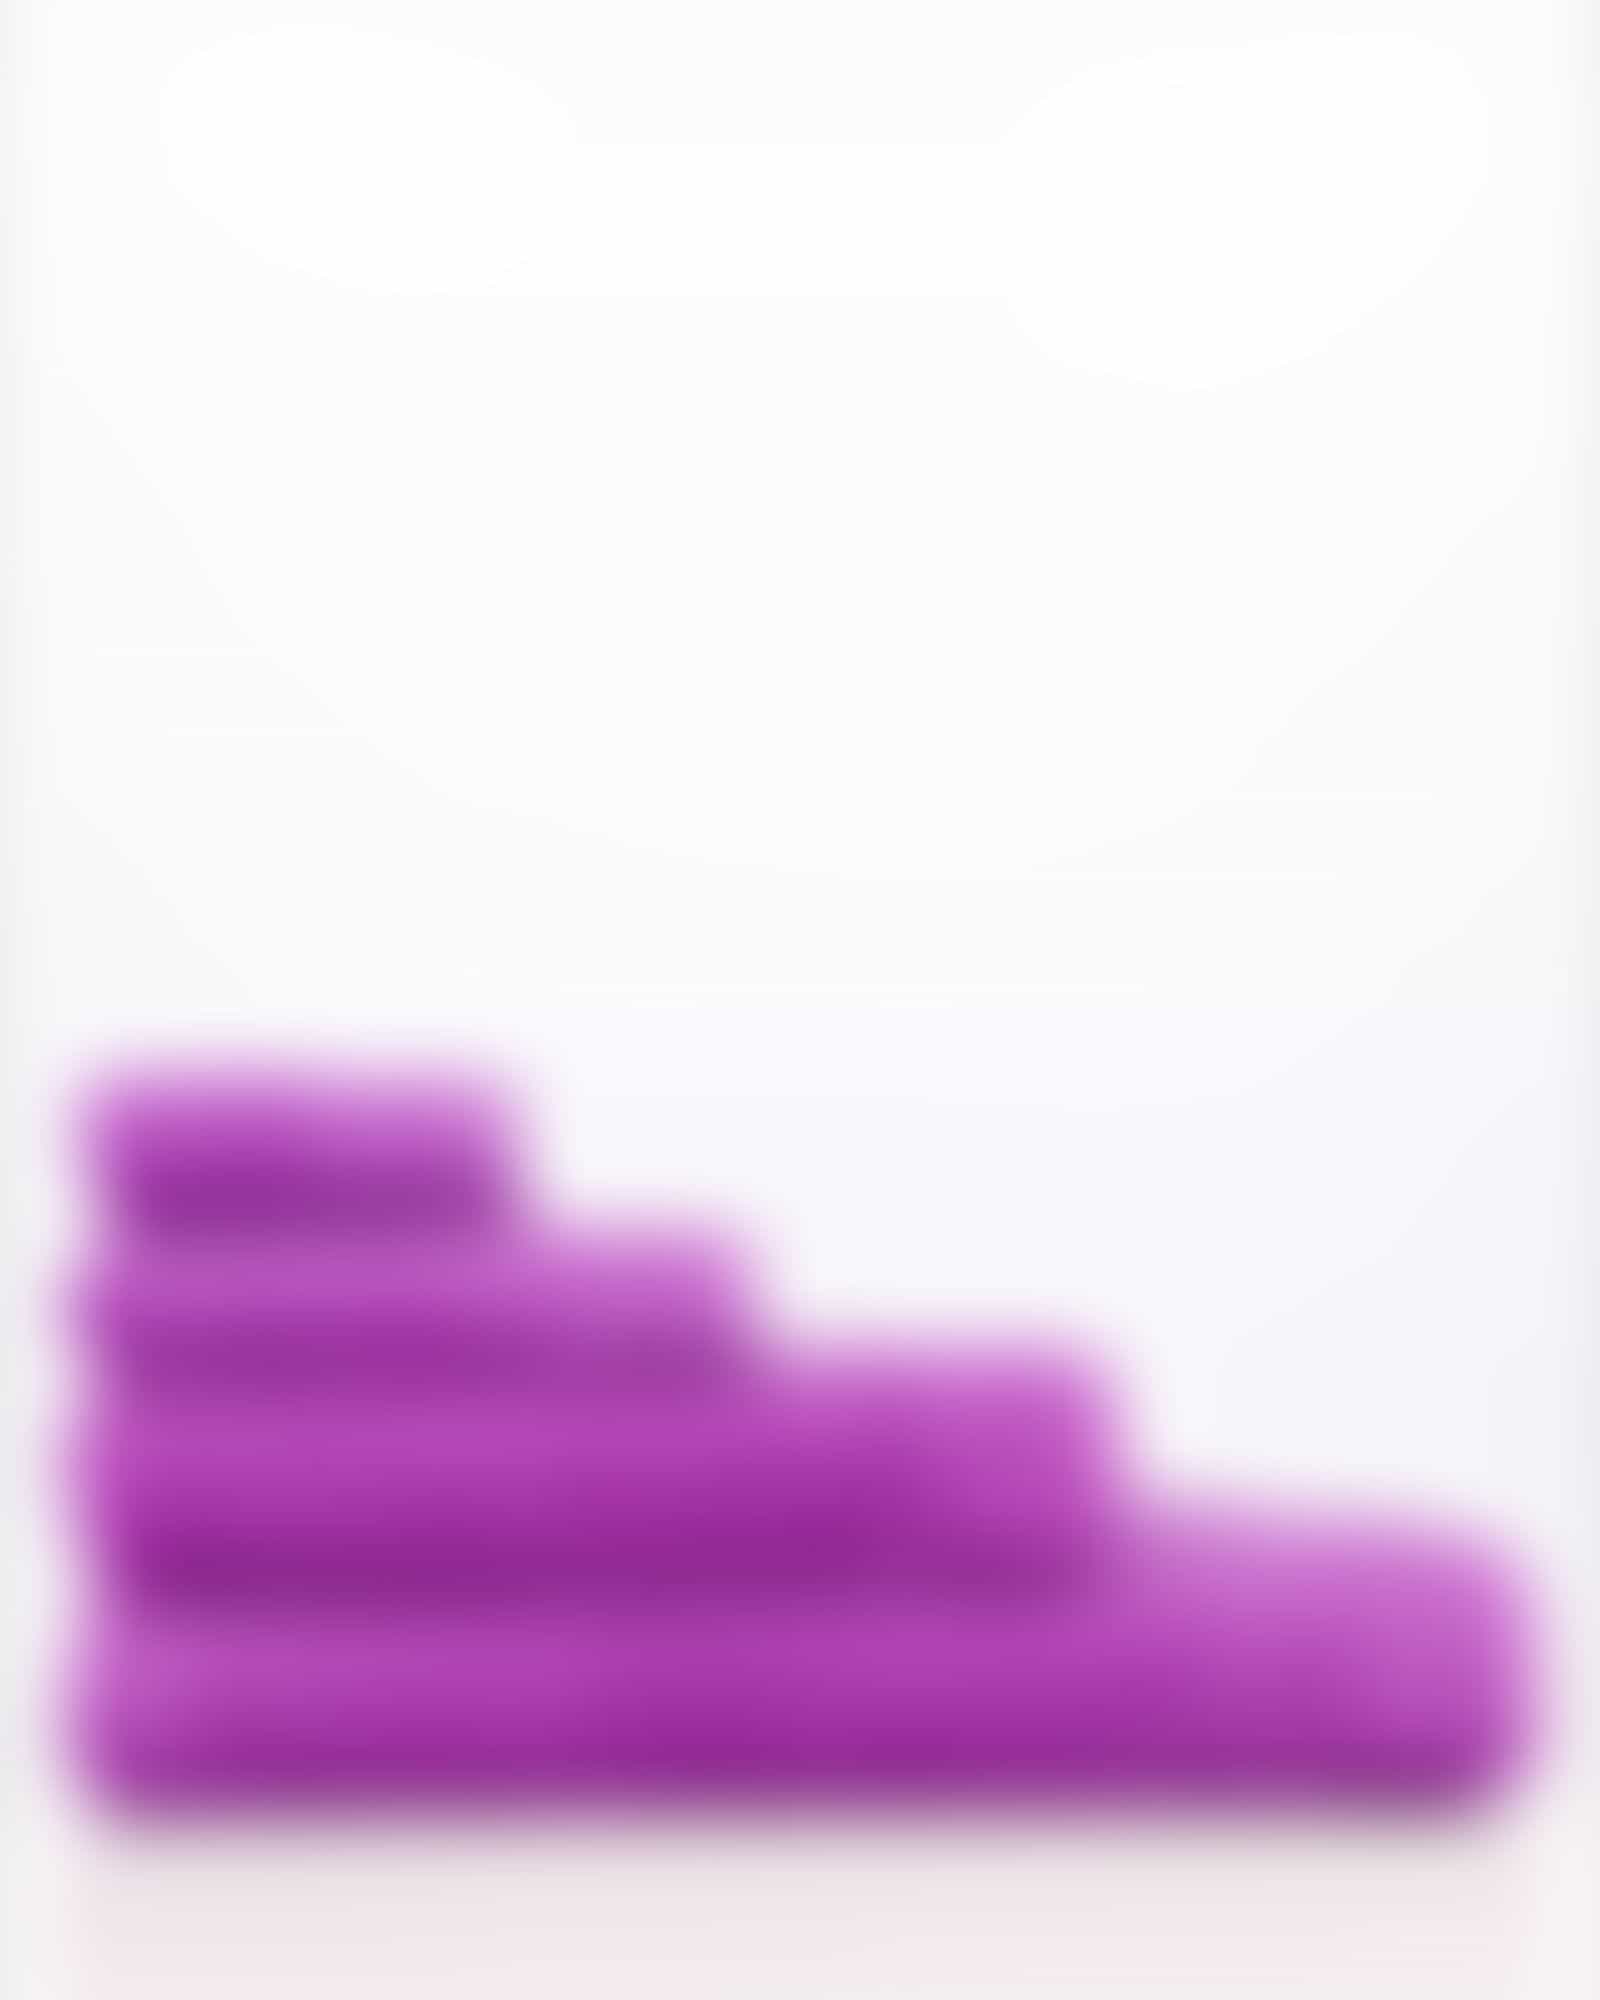 Vossen Handtücher Calypso Feeling - Farbe: lollipop - 8460 - Handtuch 50x100 cm Detailbild 3